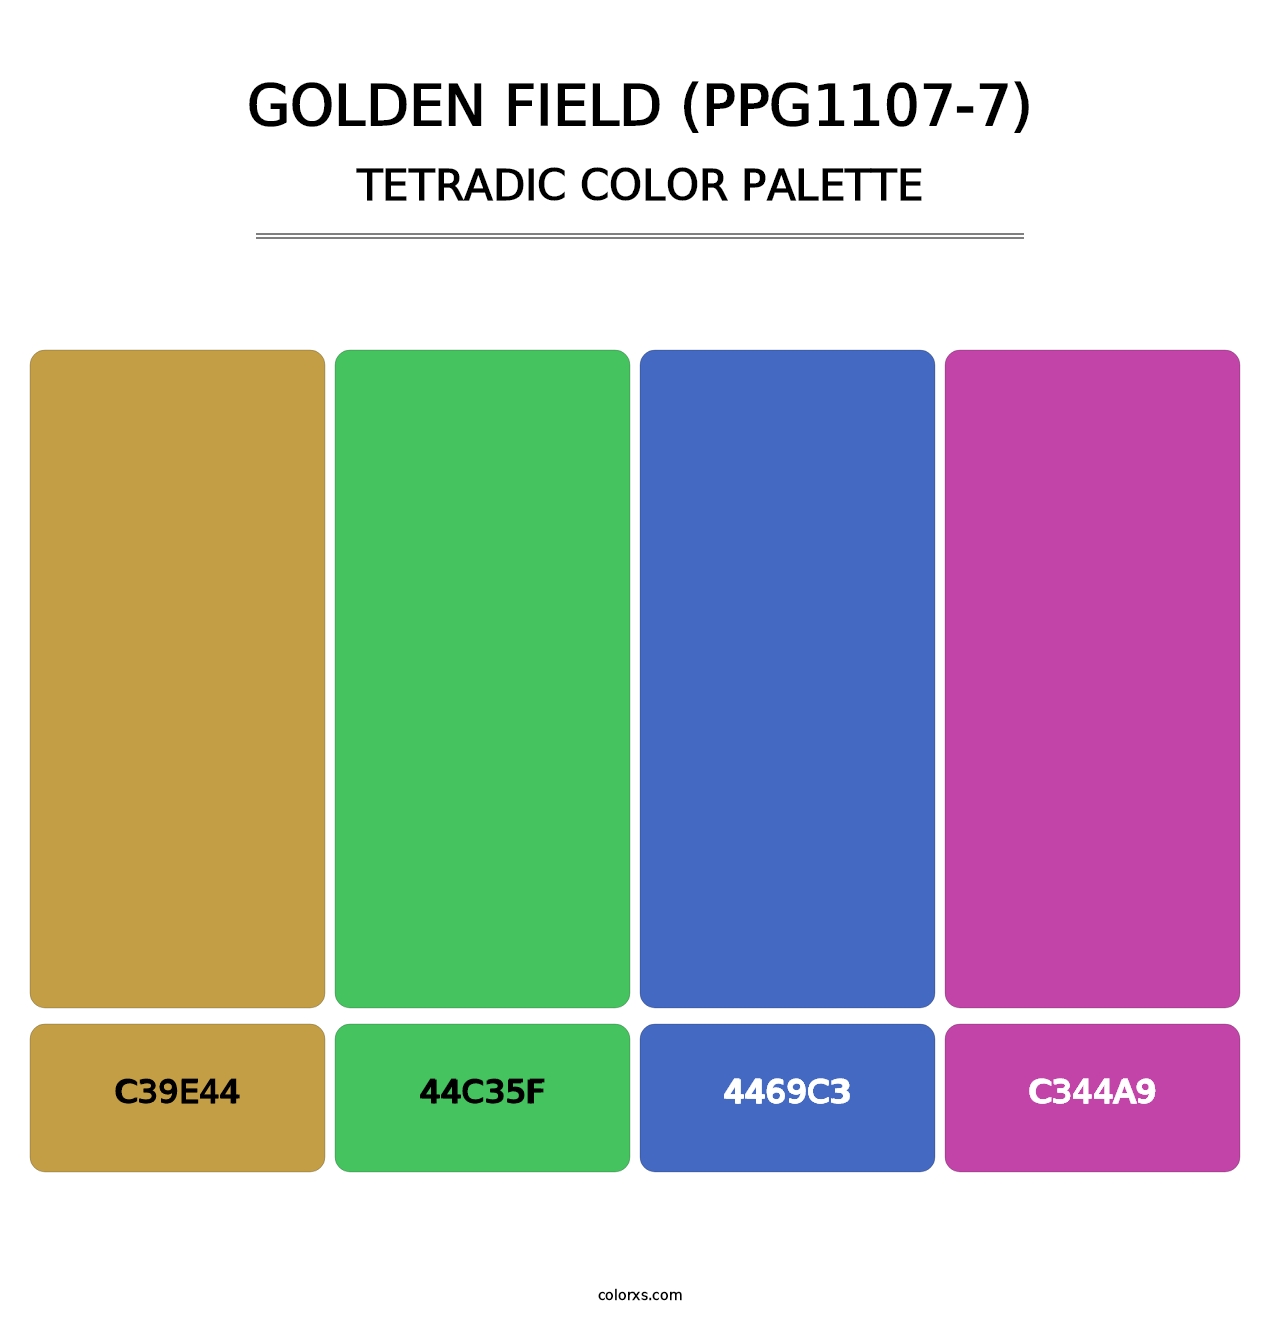 Golden Field (PPG1107-7) - Tetradic Color Palette